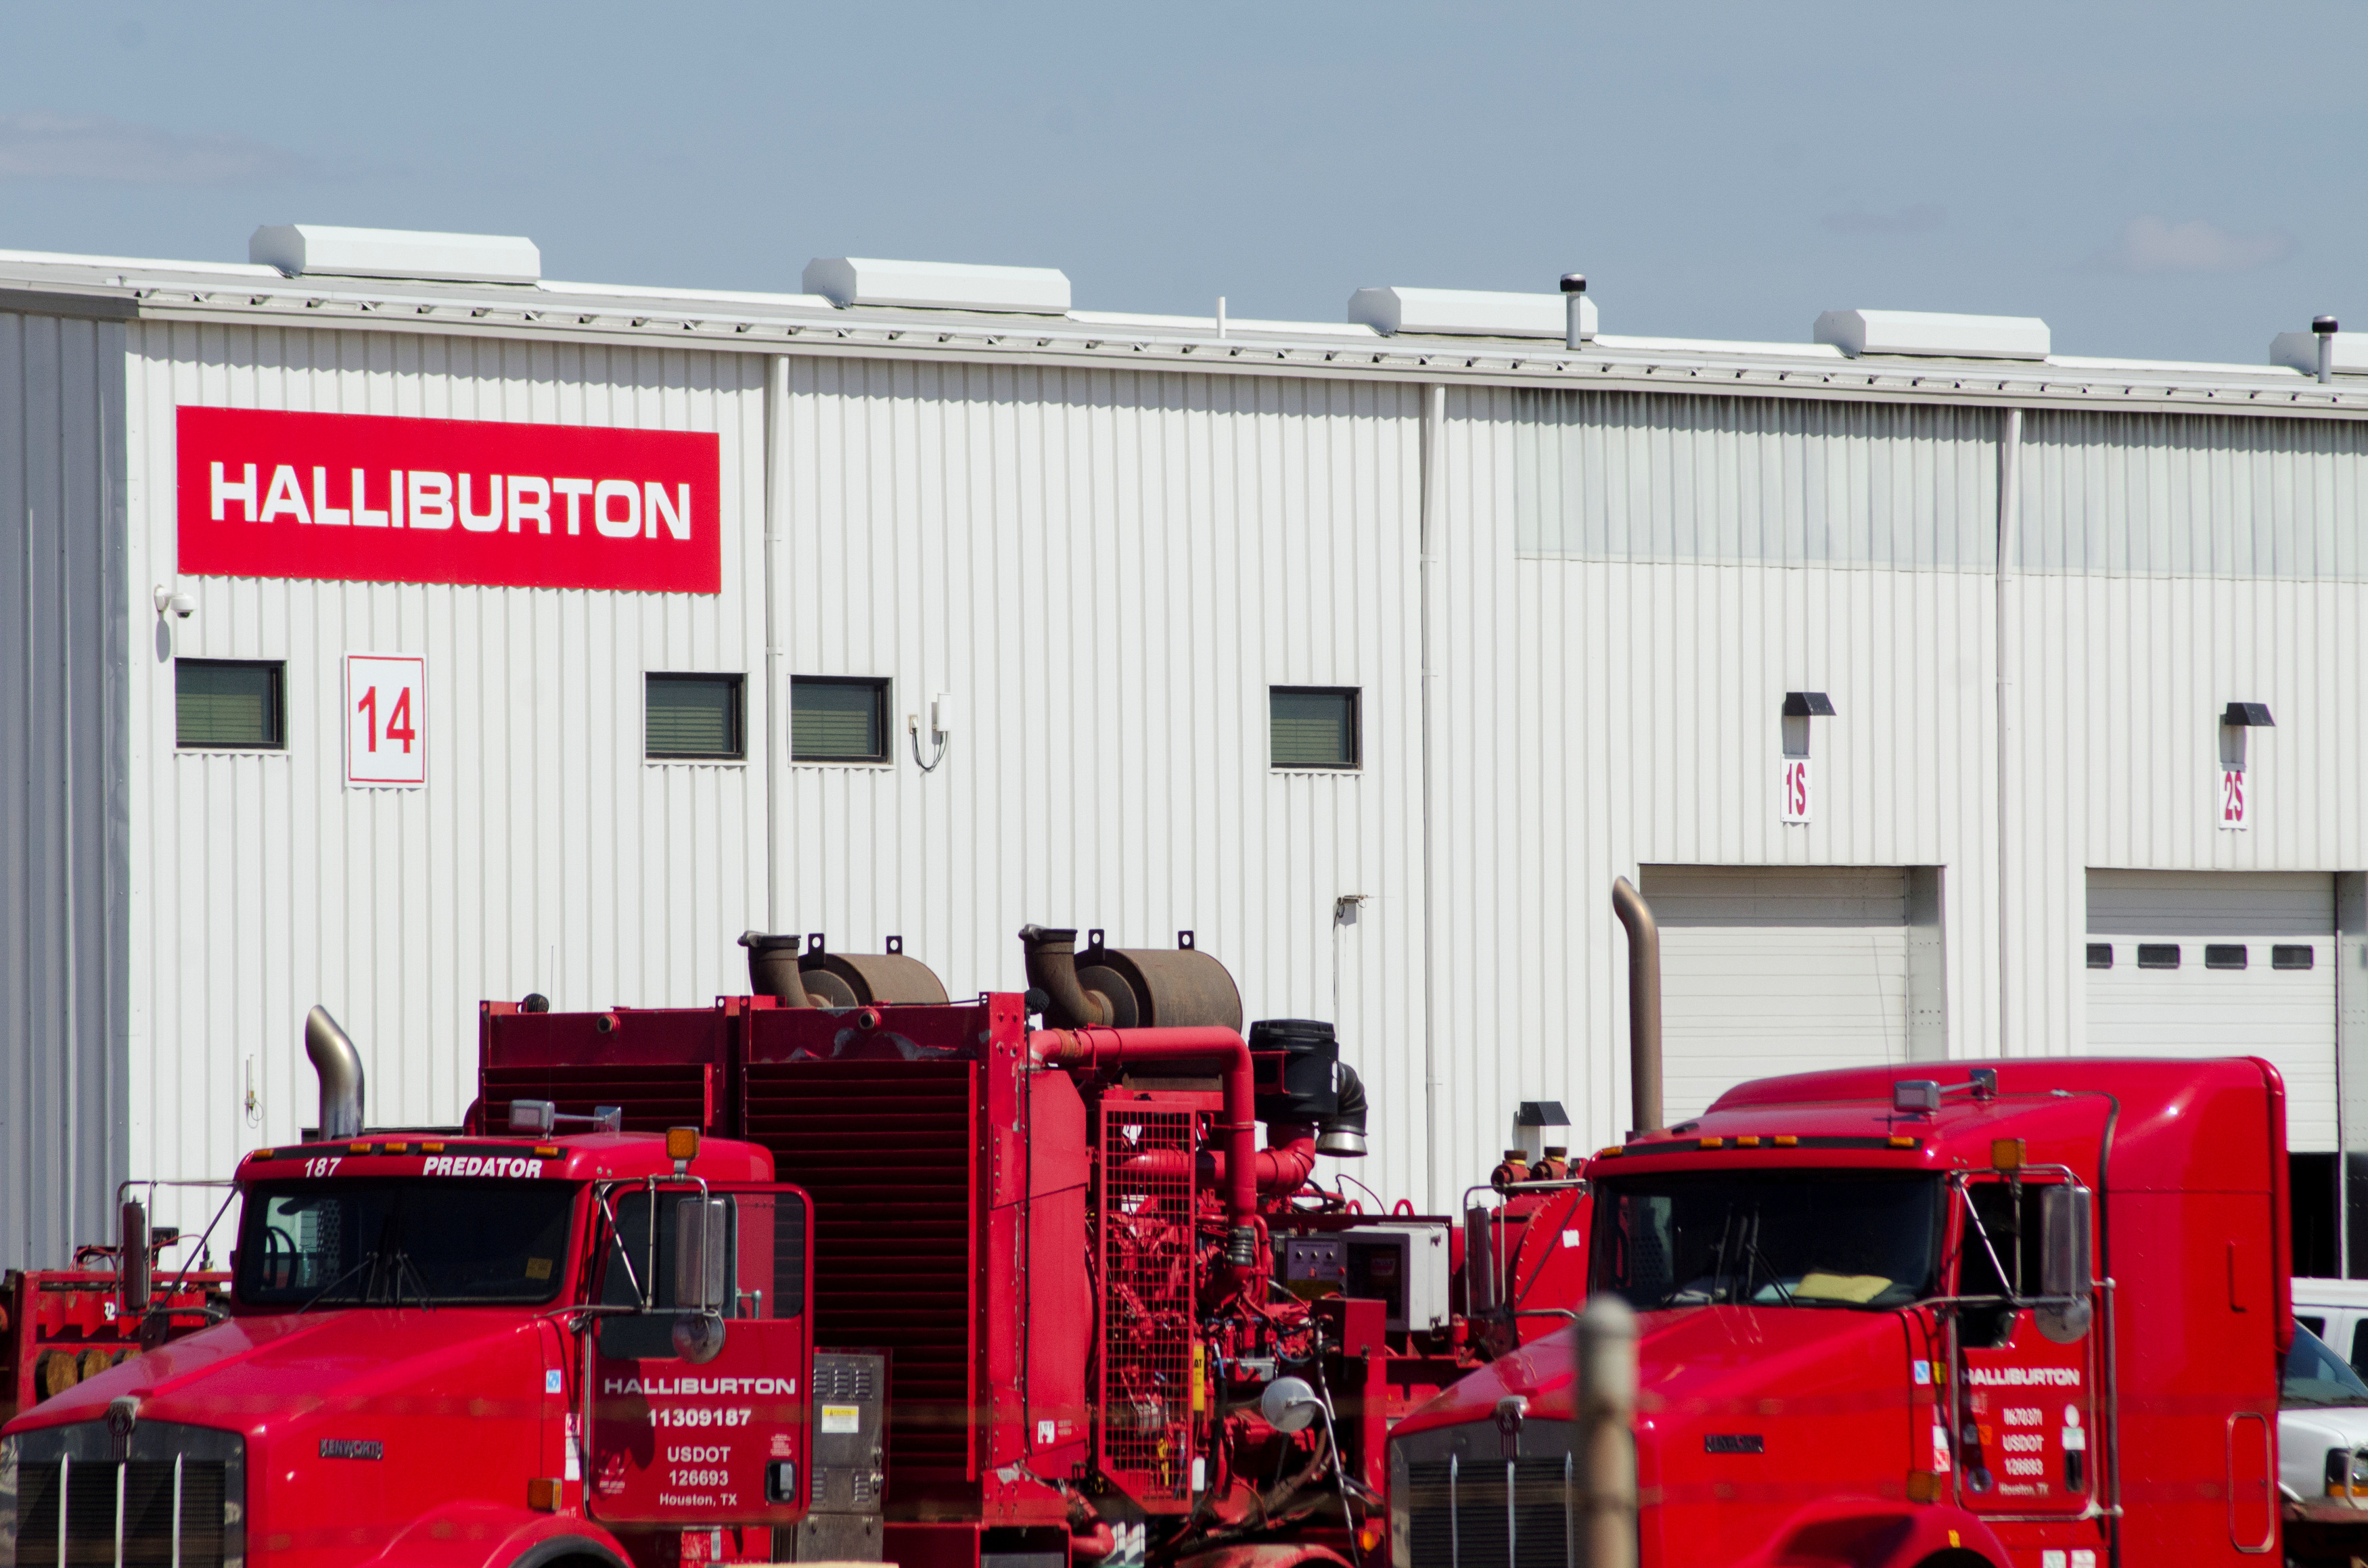 Oil production equipment is seen in a Halliburton yard in Williston